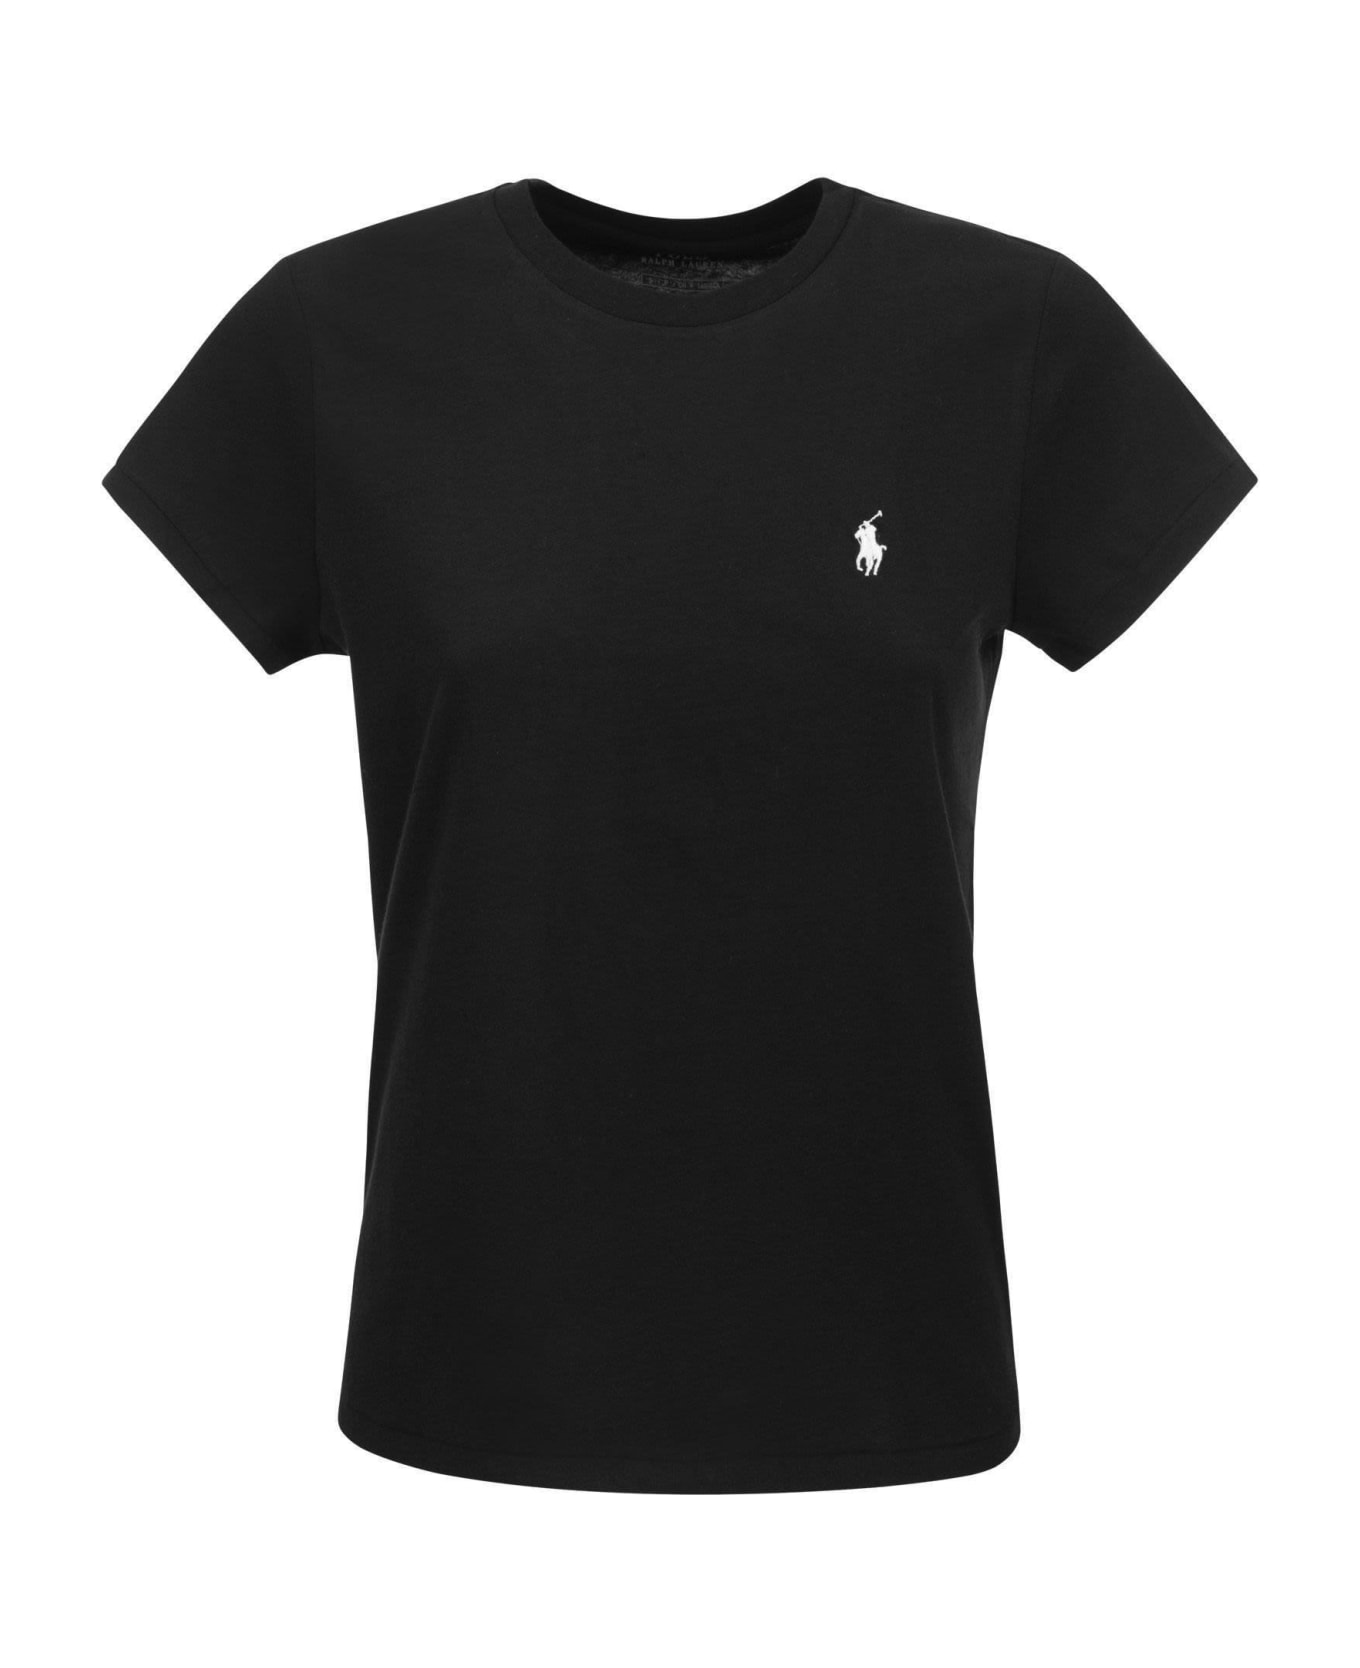 Polo Ralph Lauren Pony T-shirt - Black